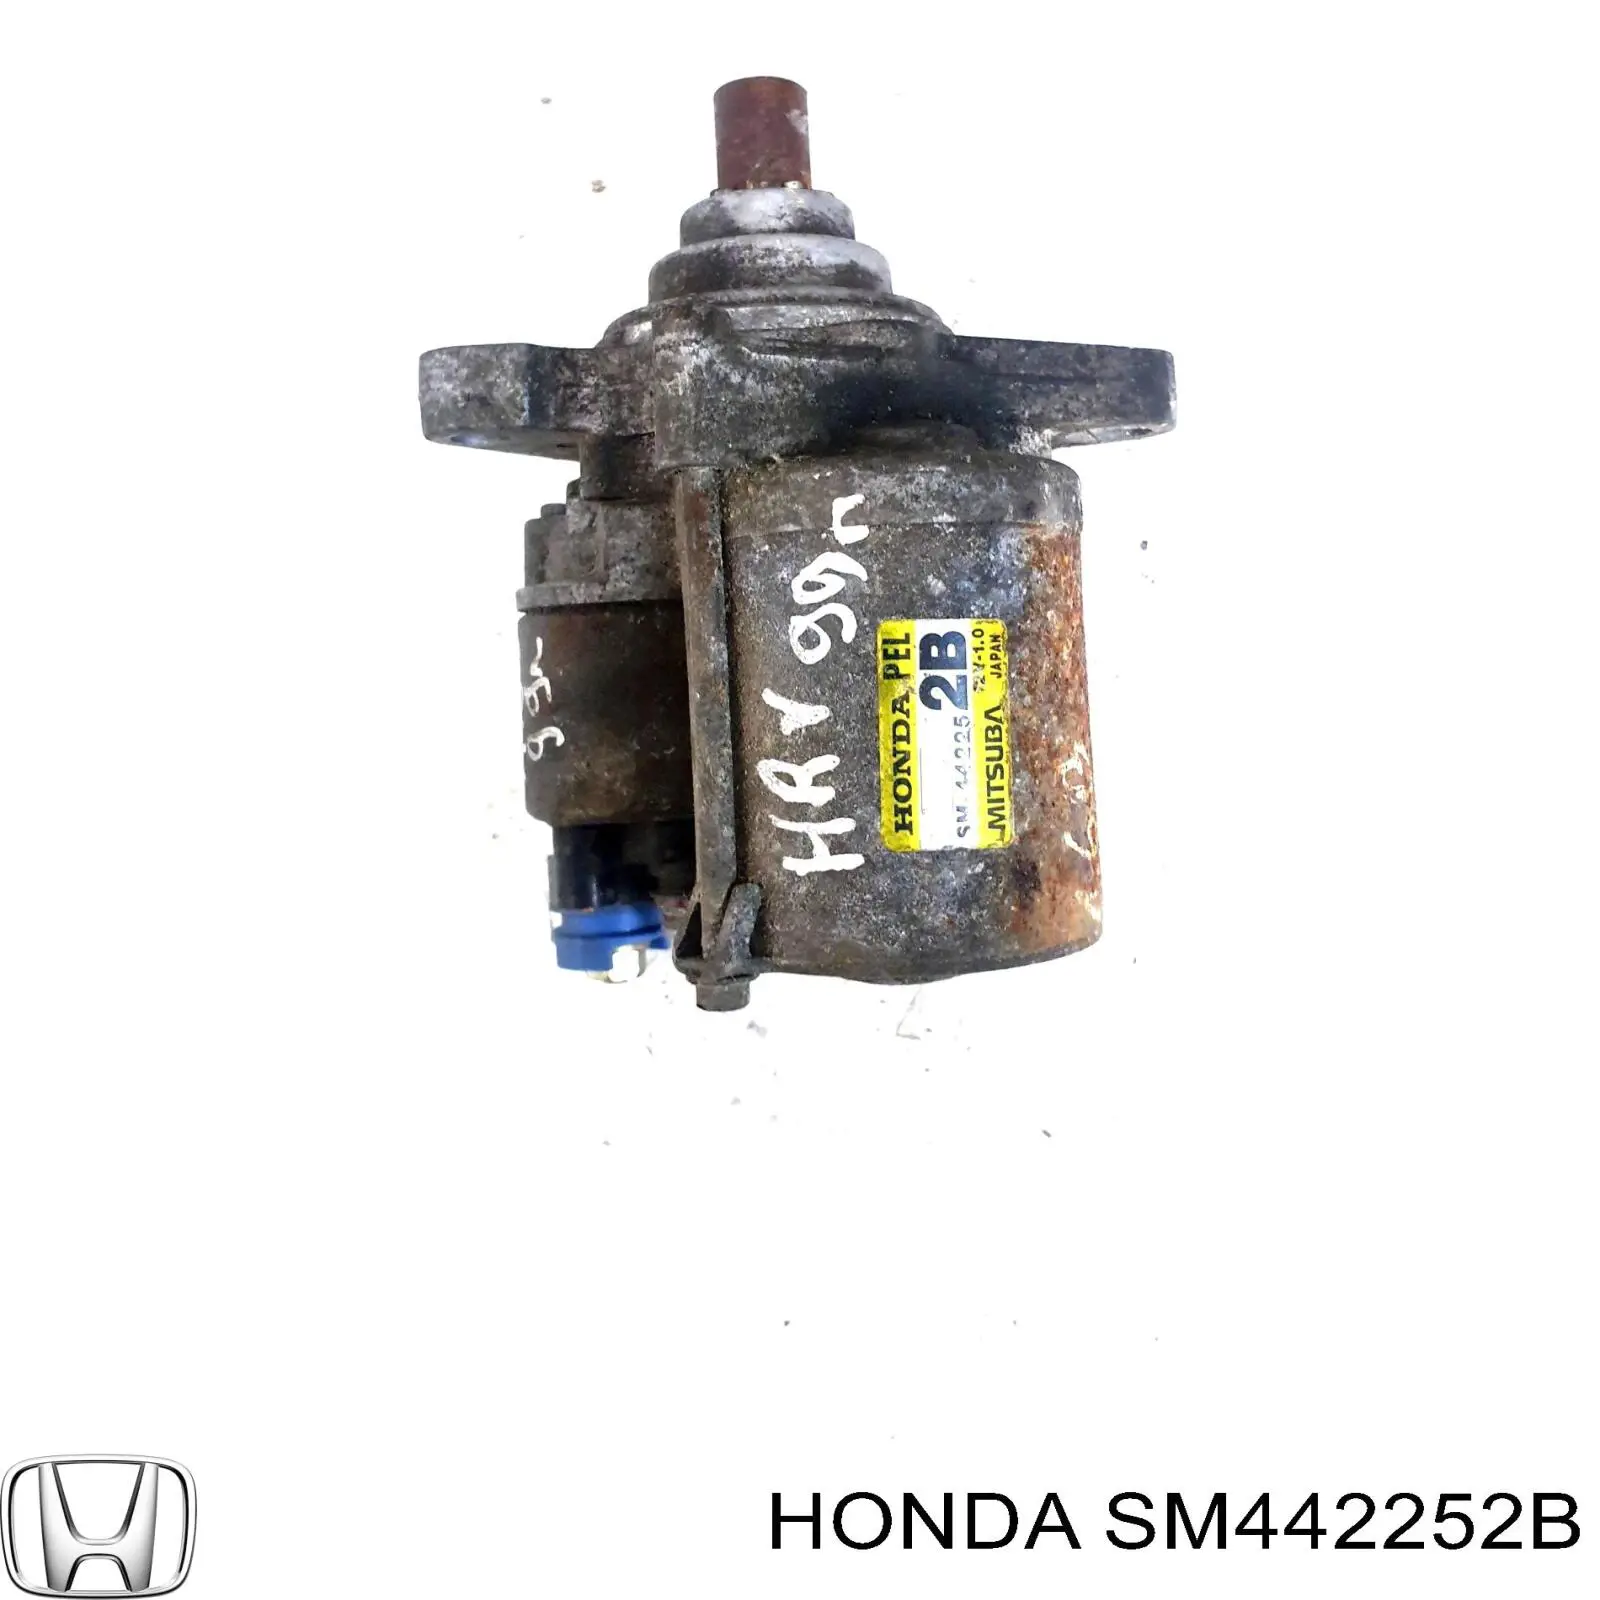 SM442252B Honda motor de arranque